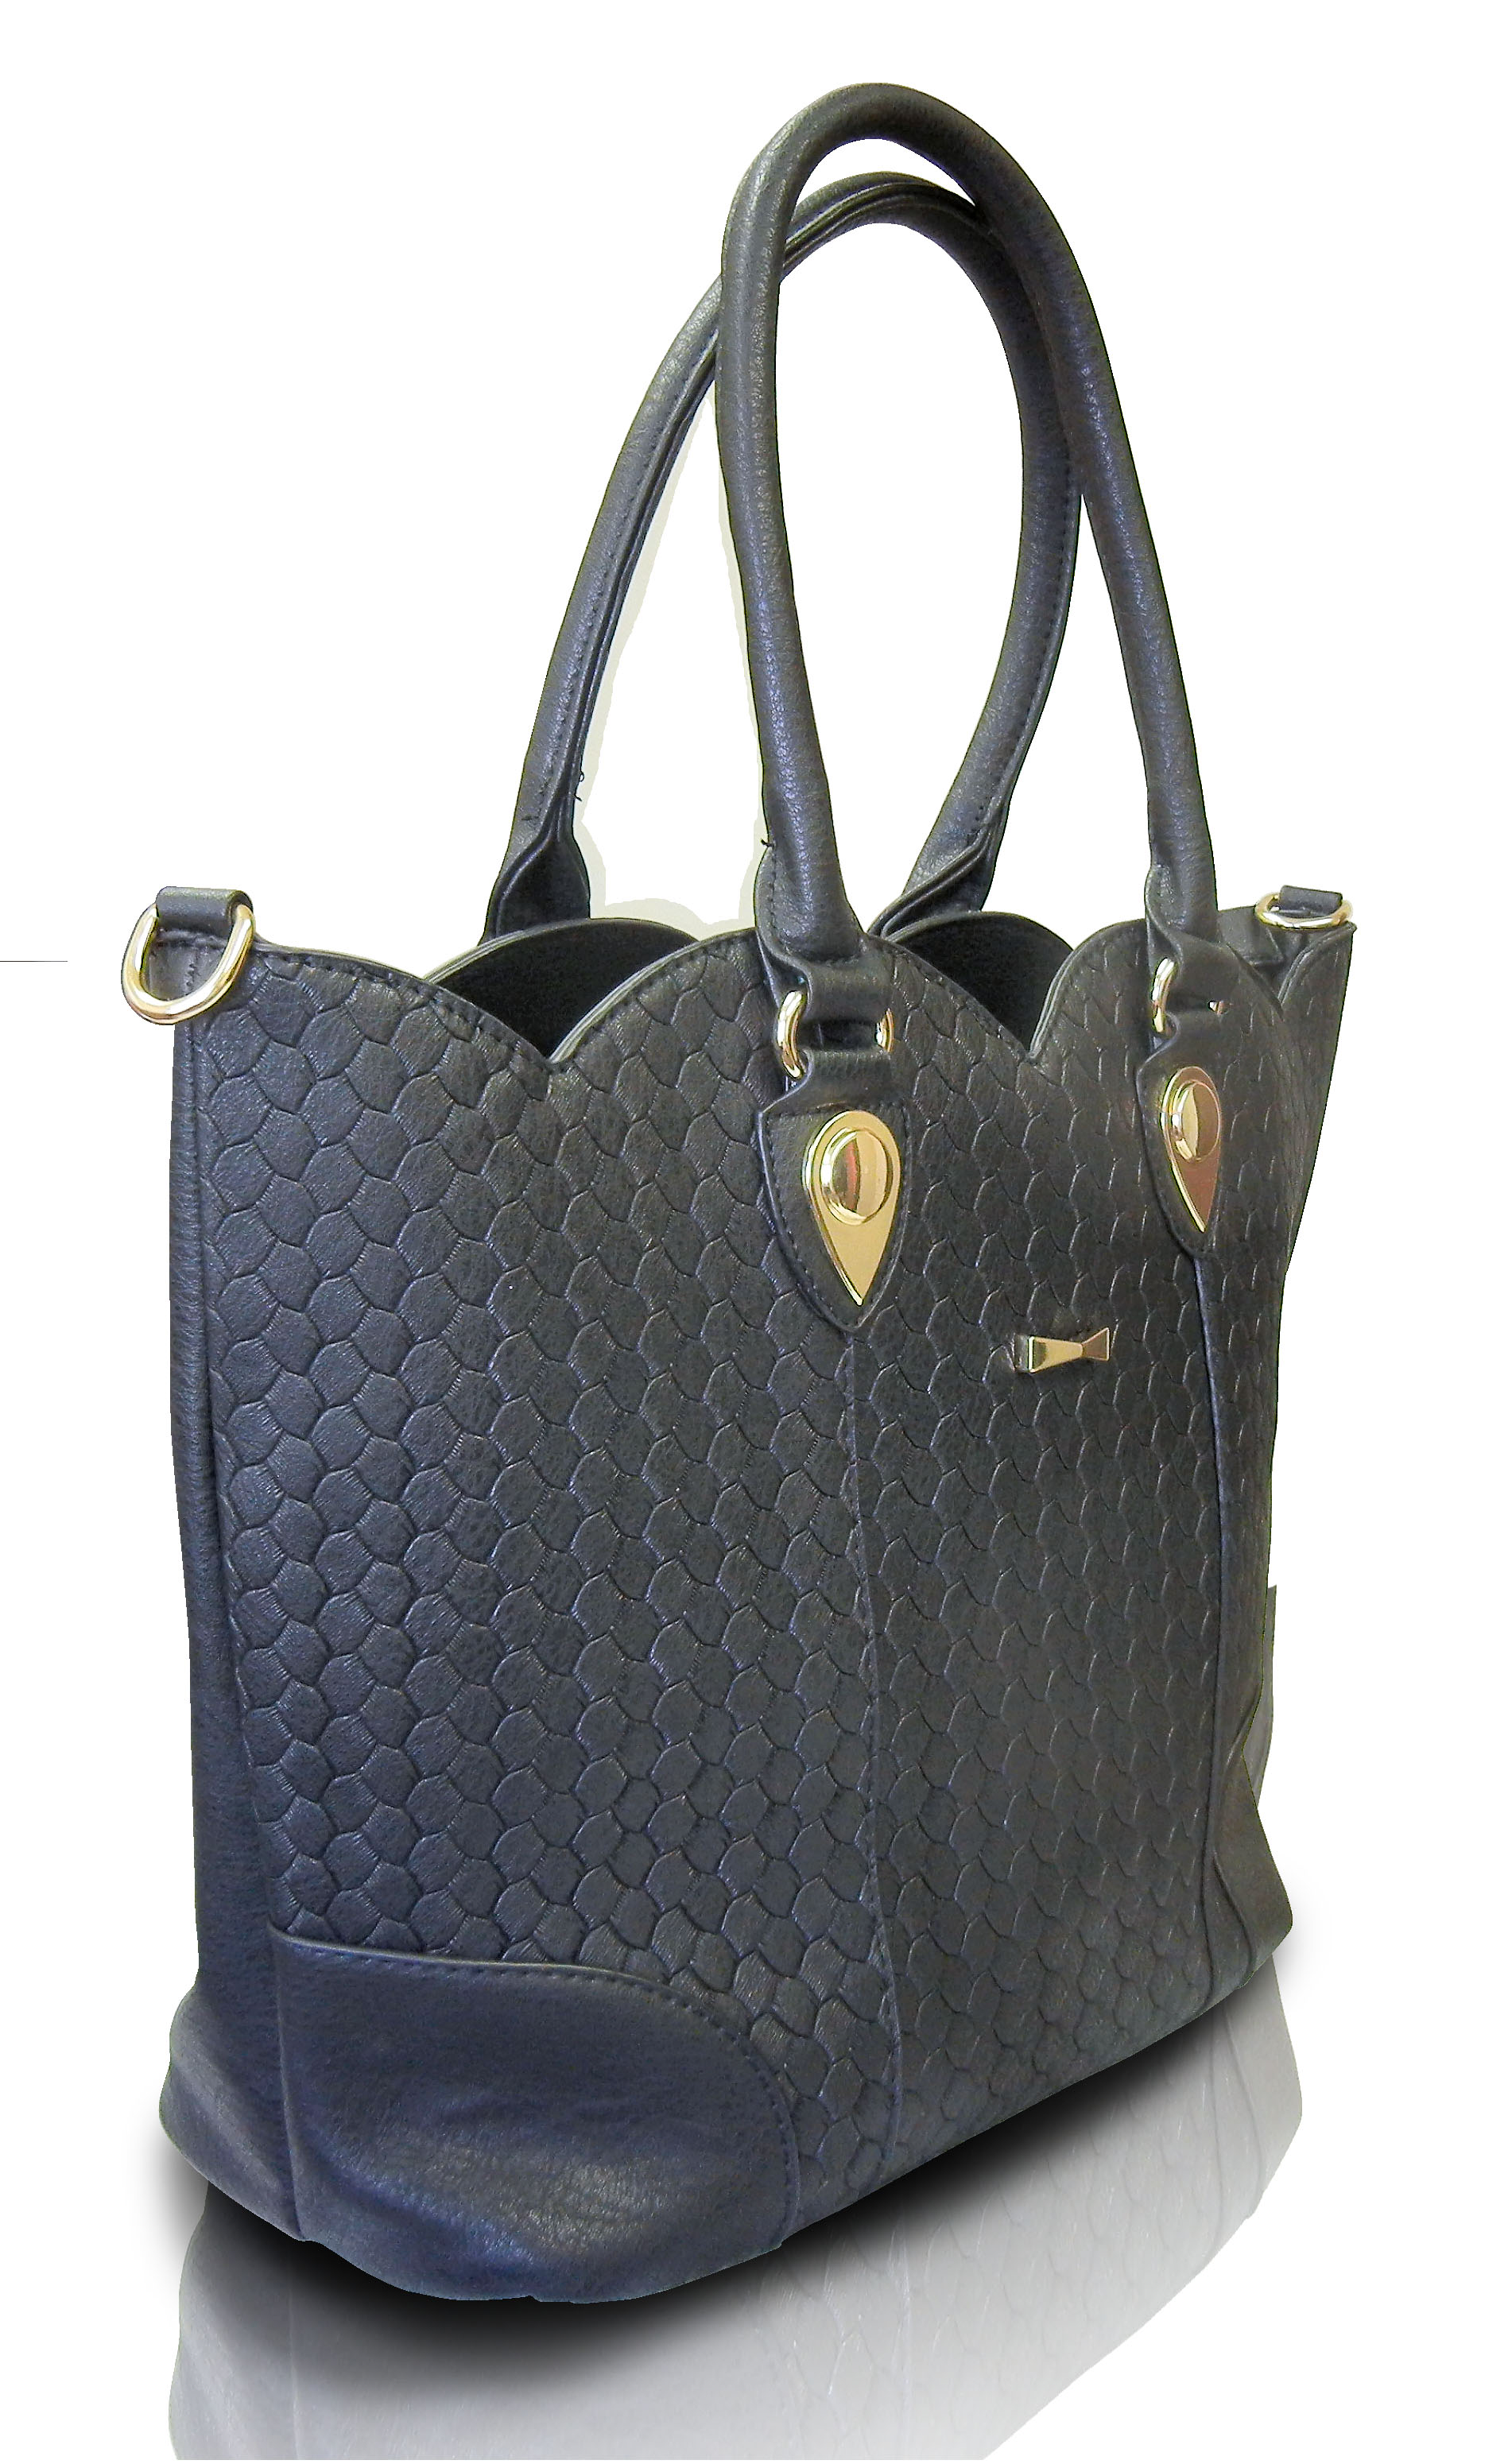 Large Handbag, groceries,babies stuff,Black color Ladies Handbag with removable straps, satchel bag,with small companion bag,wallet,